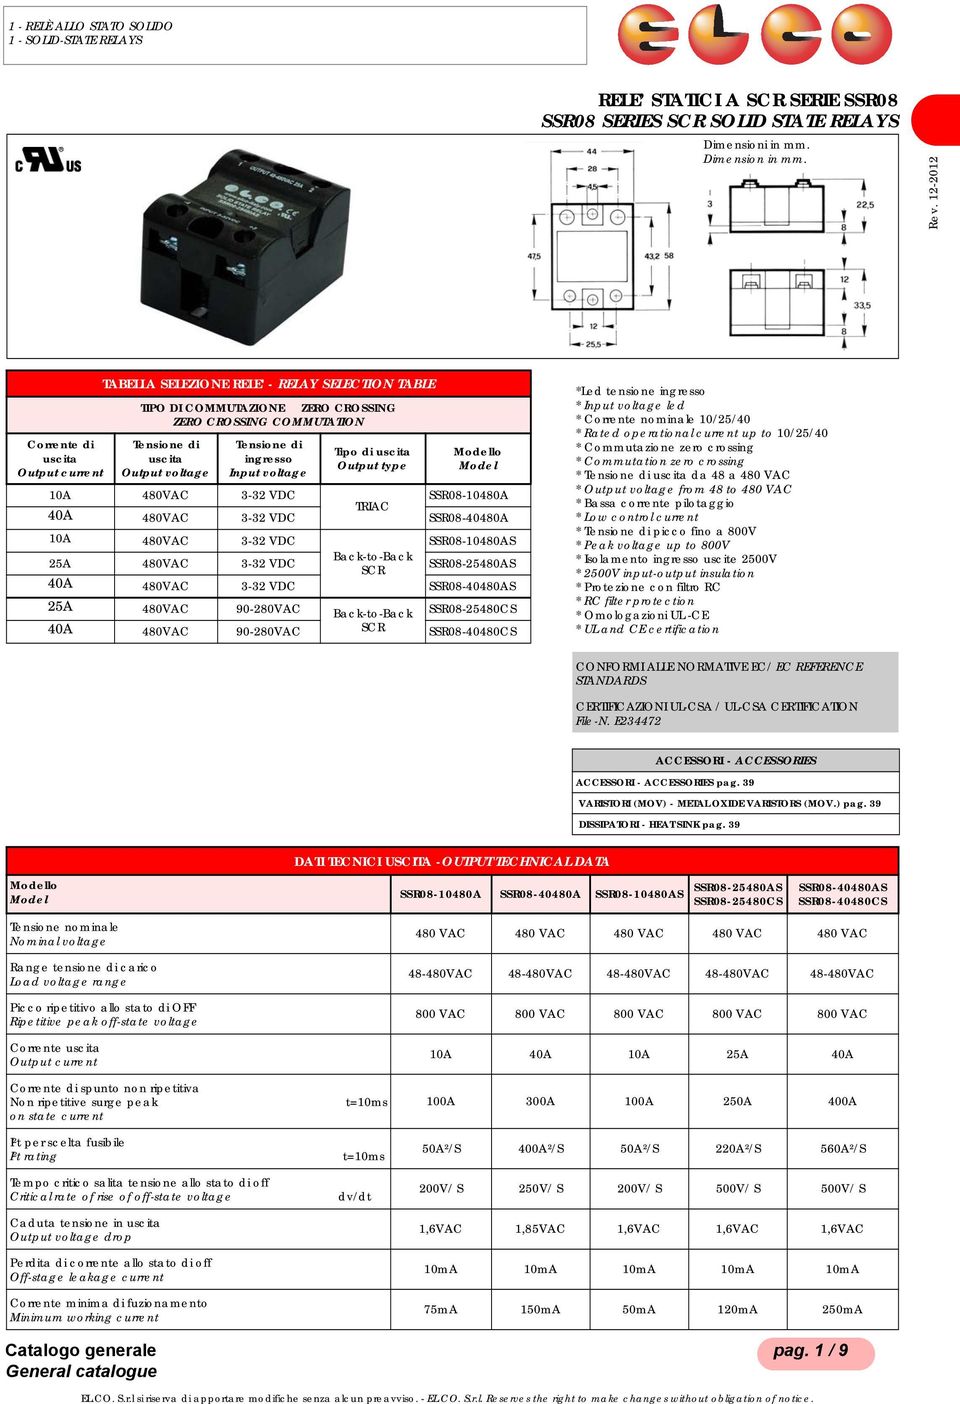 ingresso Input voltage Tipo di uscita Output type Modello Model 10A 480VAC 3-32 VDC SSR08-10480A 40A 480VAC 3-32 VDC TRIAC SSR08-40480A 10A 480VAC 3-32 VDC SSR08-10480AS 25A 480VAC 3-32 VDC